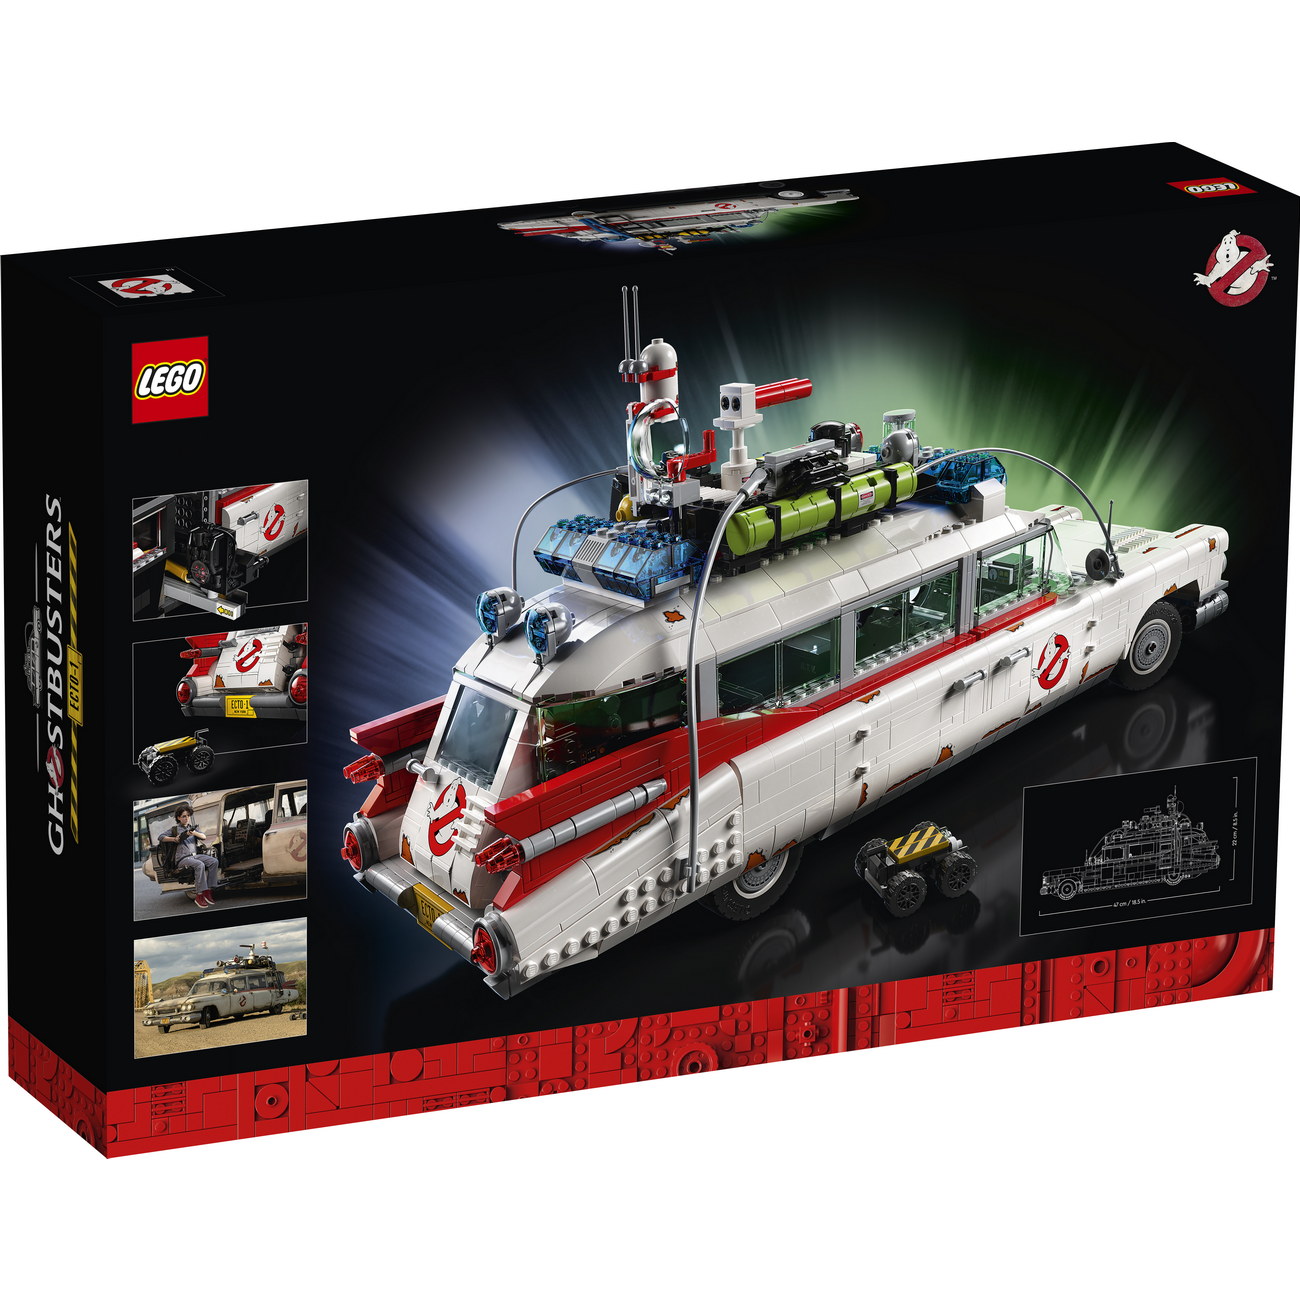 LEGO Ghostbusters ECTO-1 10274